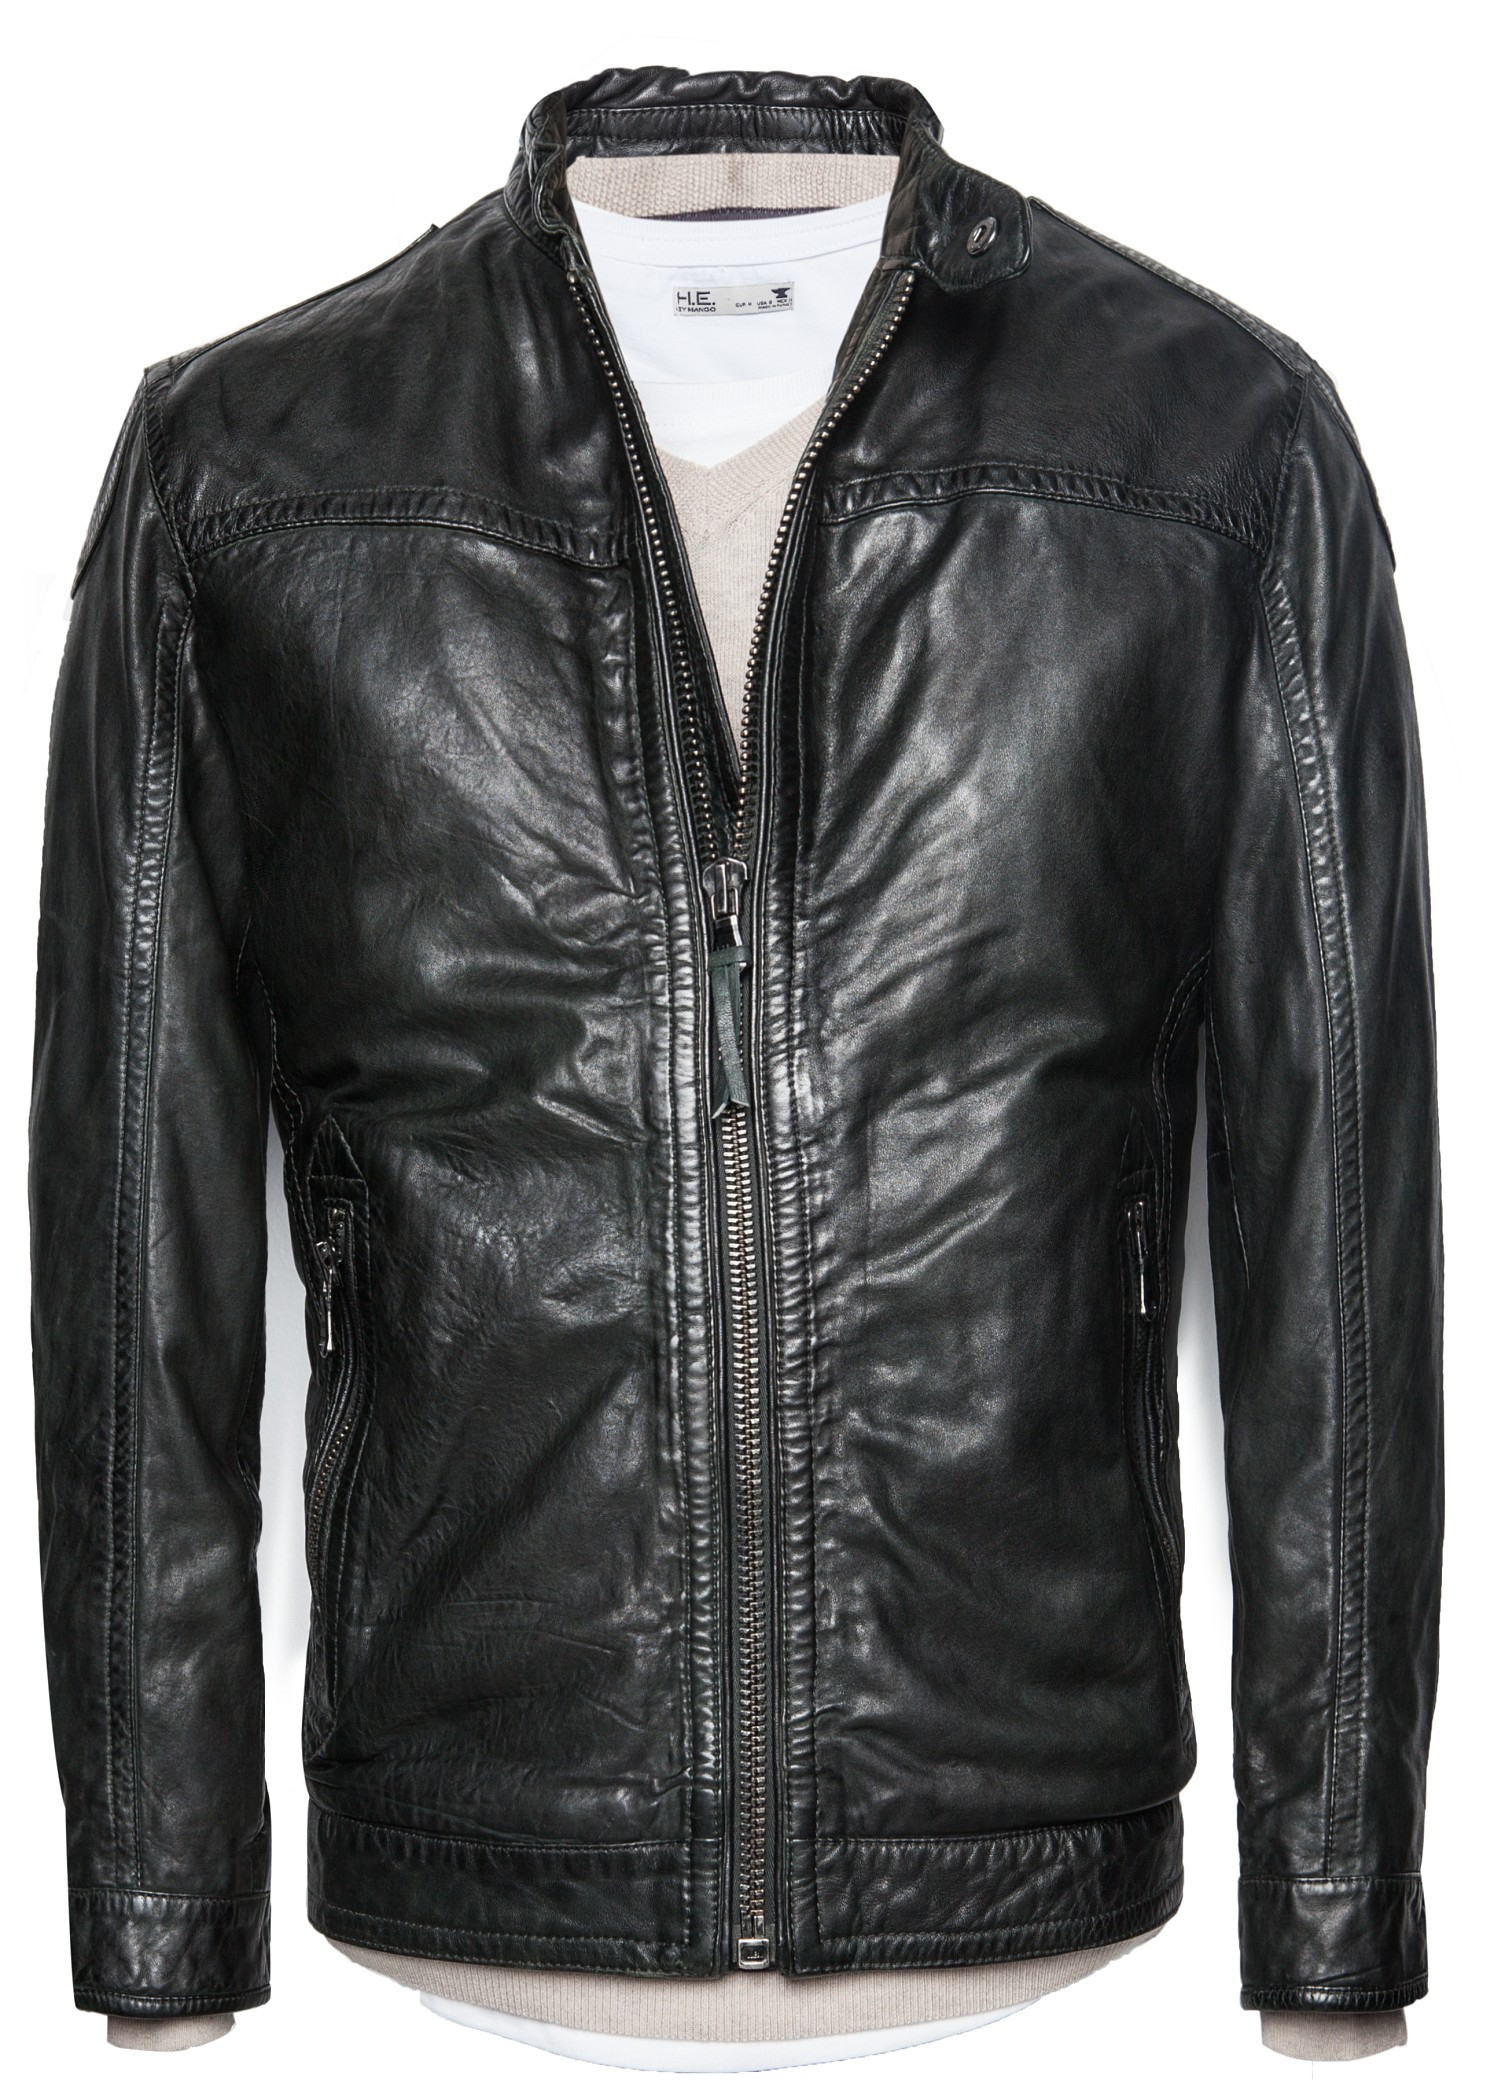 Lyst - Mango Leather Biker Jacket in Black for Men